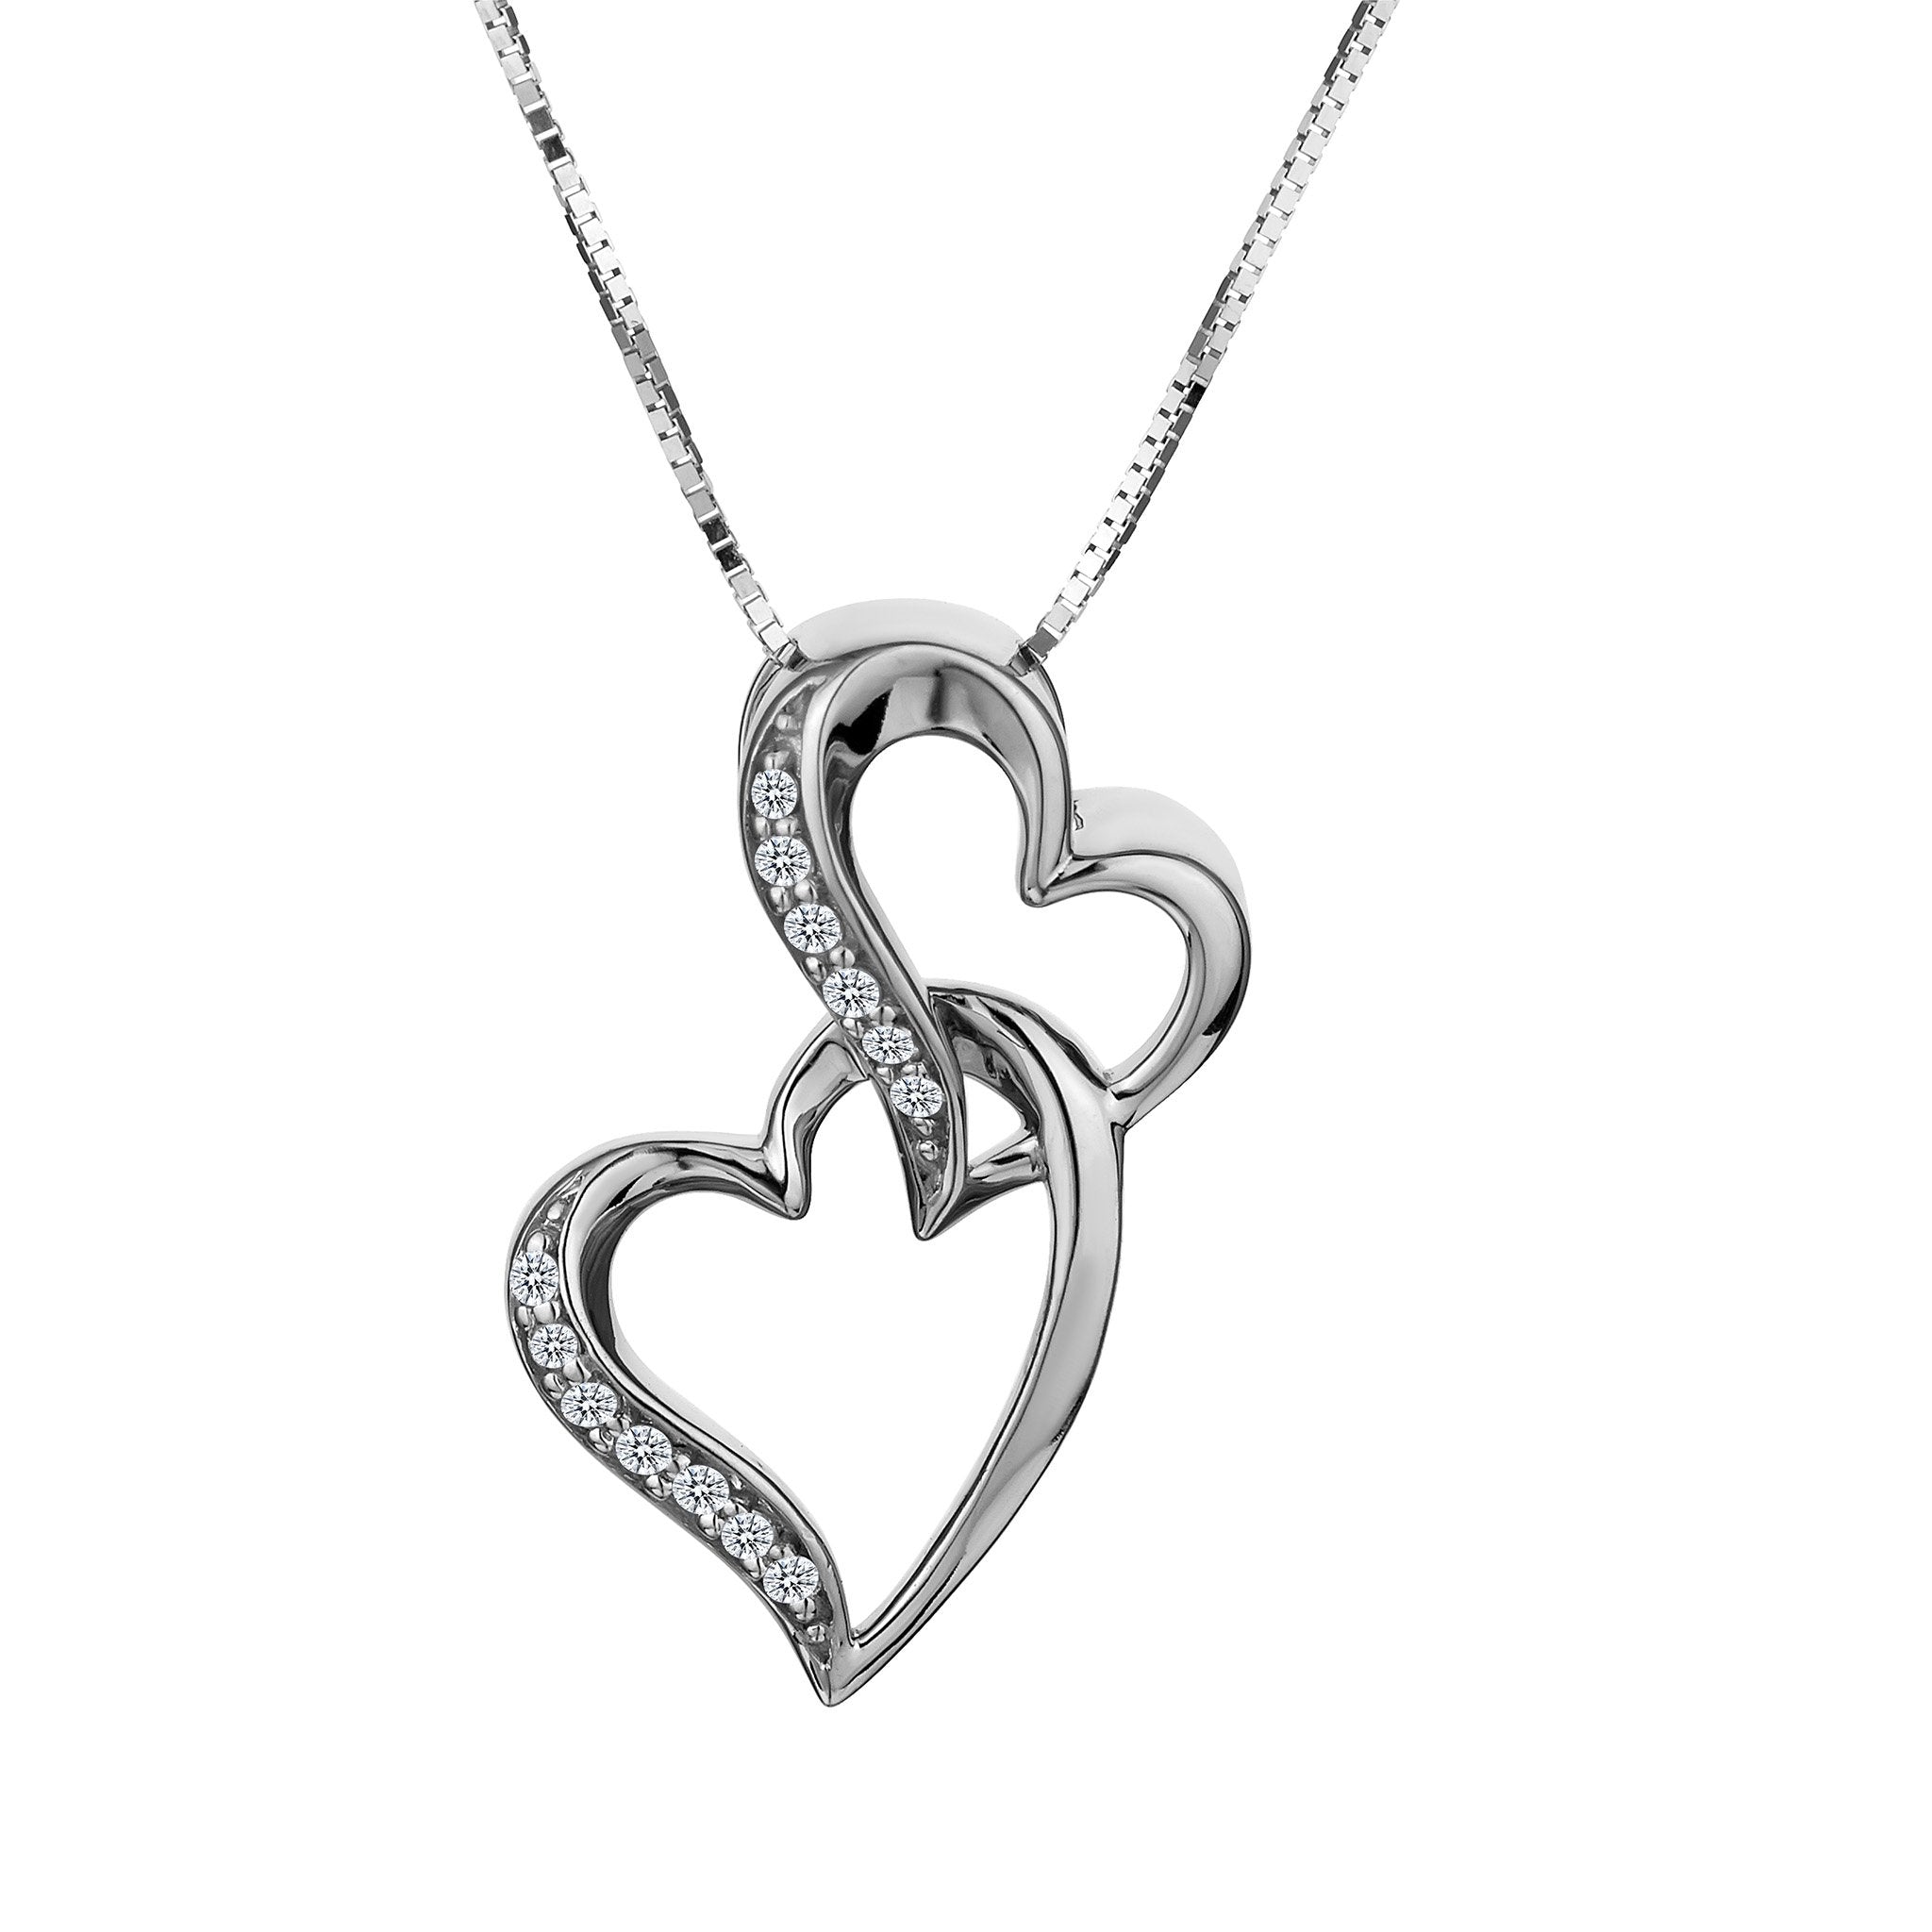 .06 Carat of Diamonds "Interlocking Love" Heart Pendant, 10kt White Gold..........................NOW